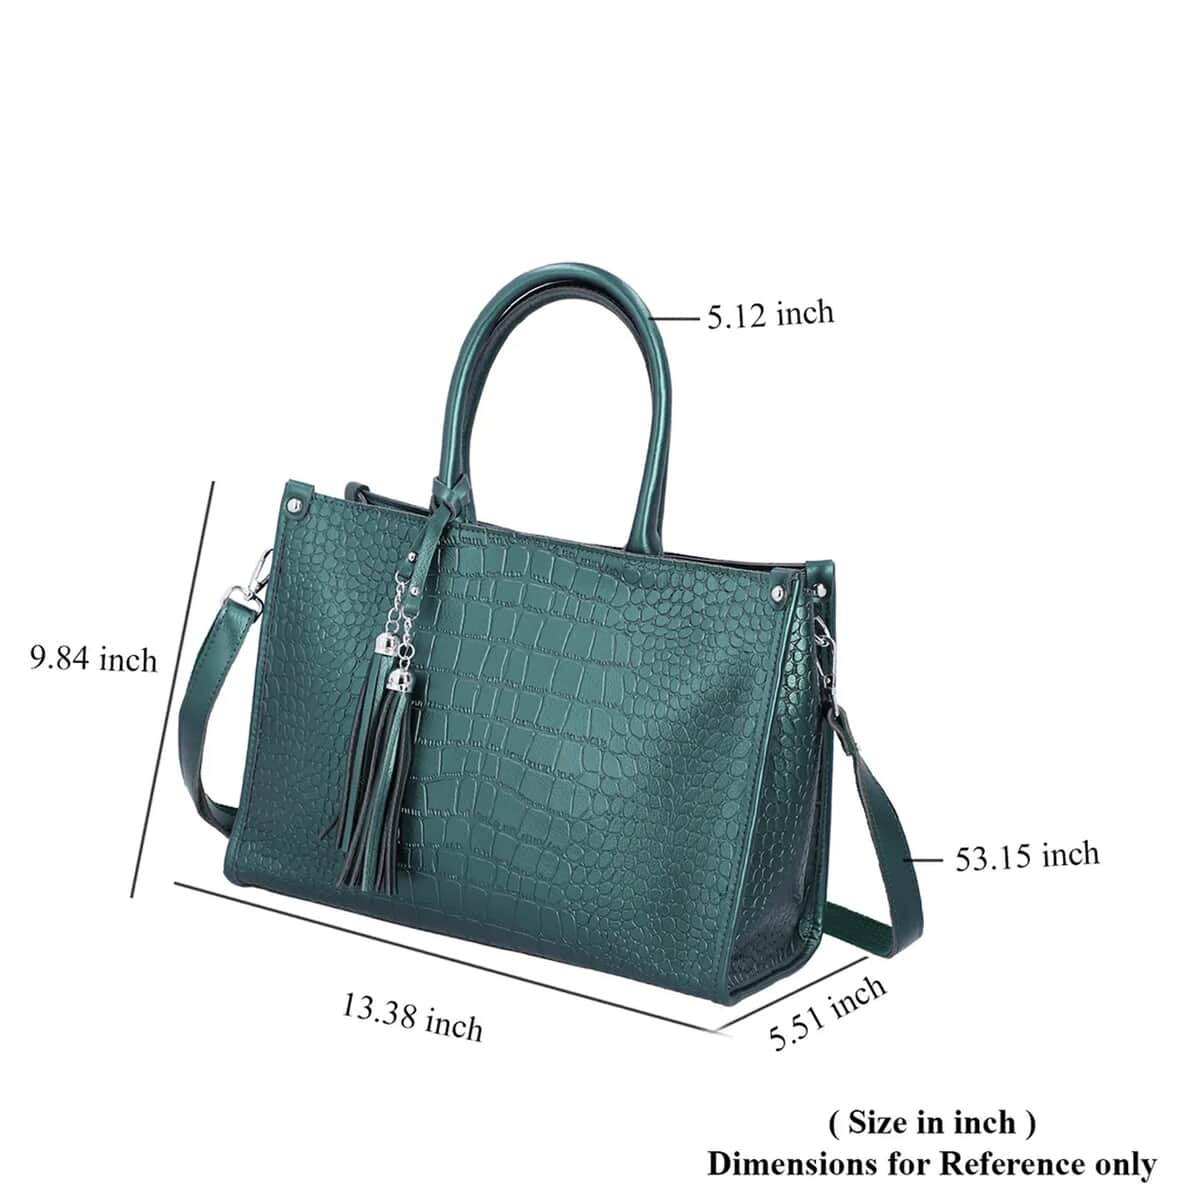 Green Crocodile Pattern Genuine Leather Convertible Bag with Detachable Shoulder Strap, Leather Handbag, Crossbody Bag, Purse, Leather Bag for Women 